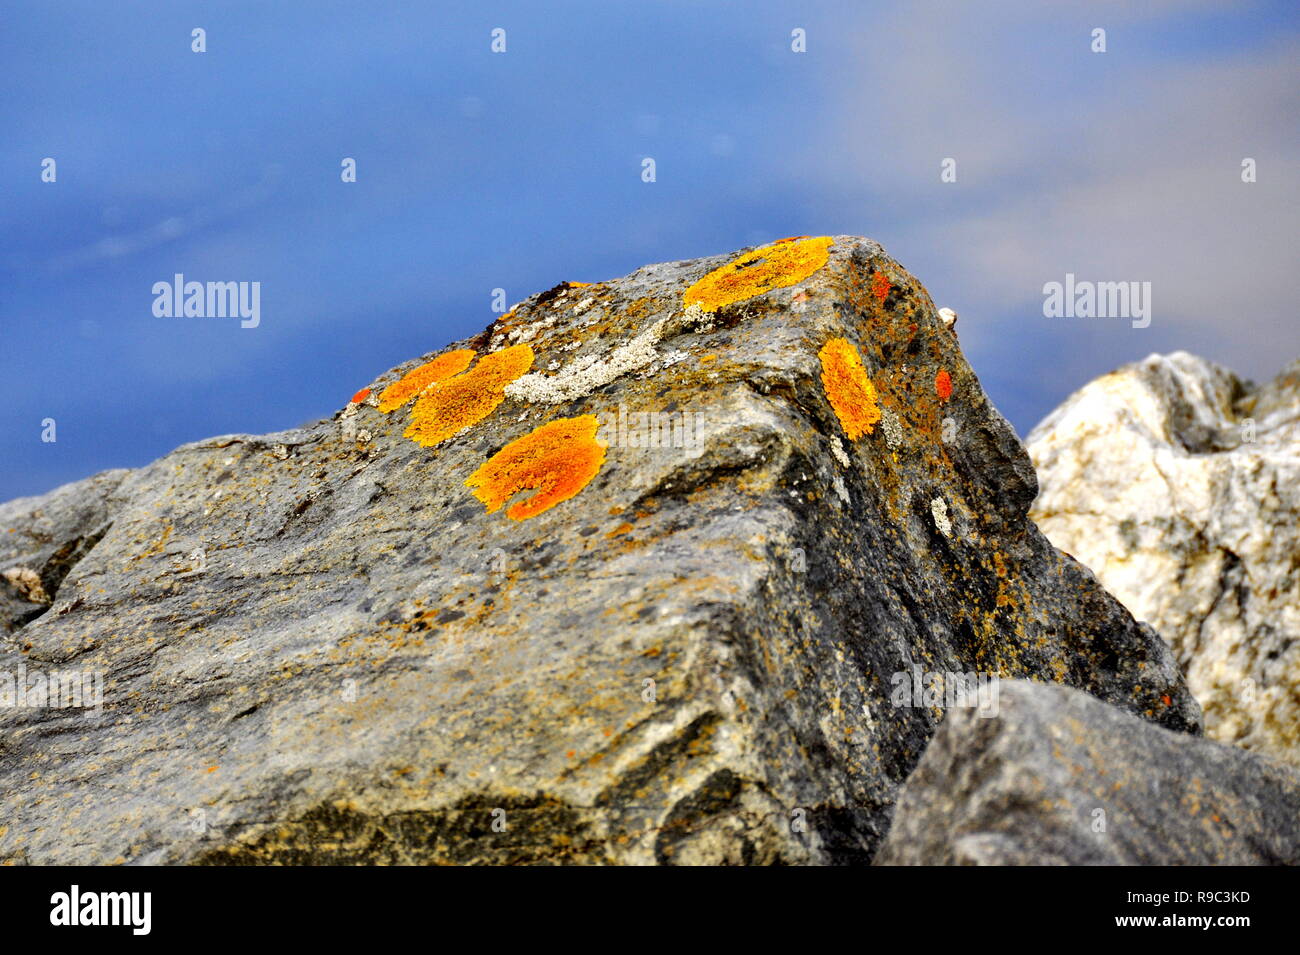 Common orange wall lichen on stone Stock Photo